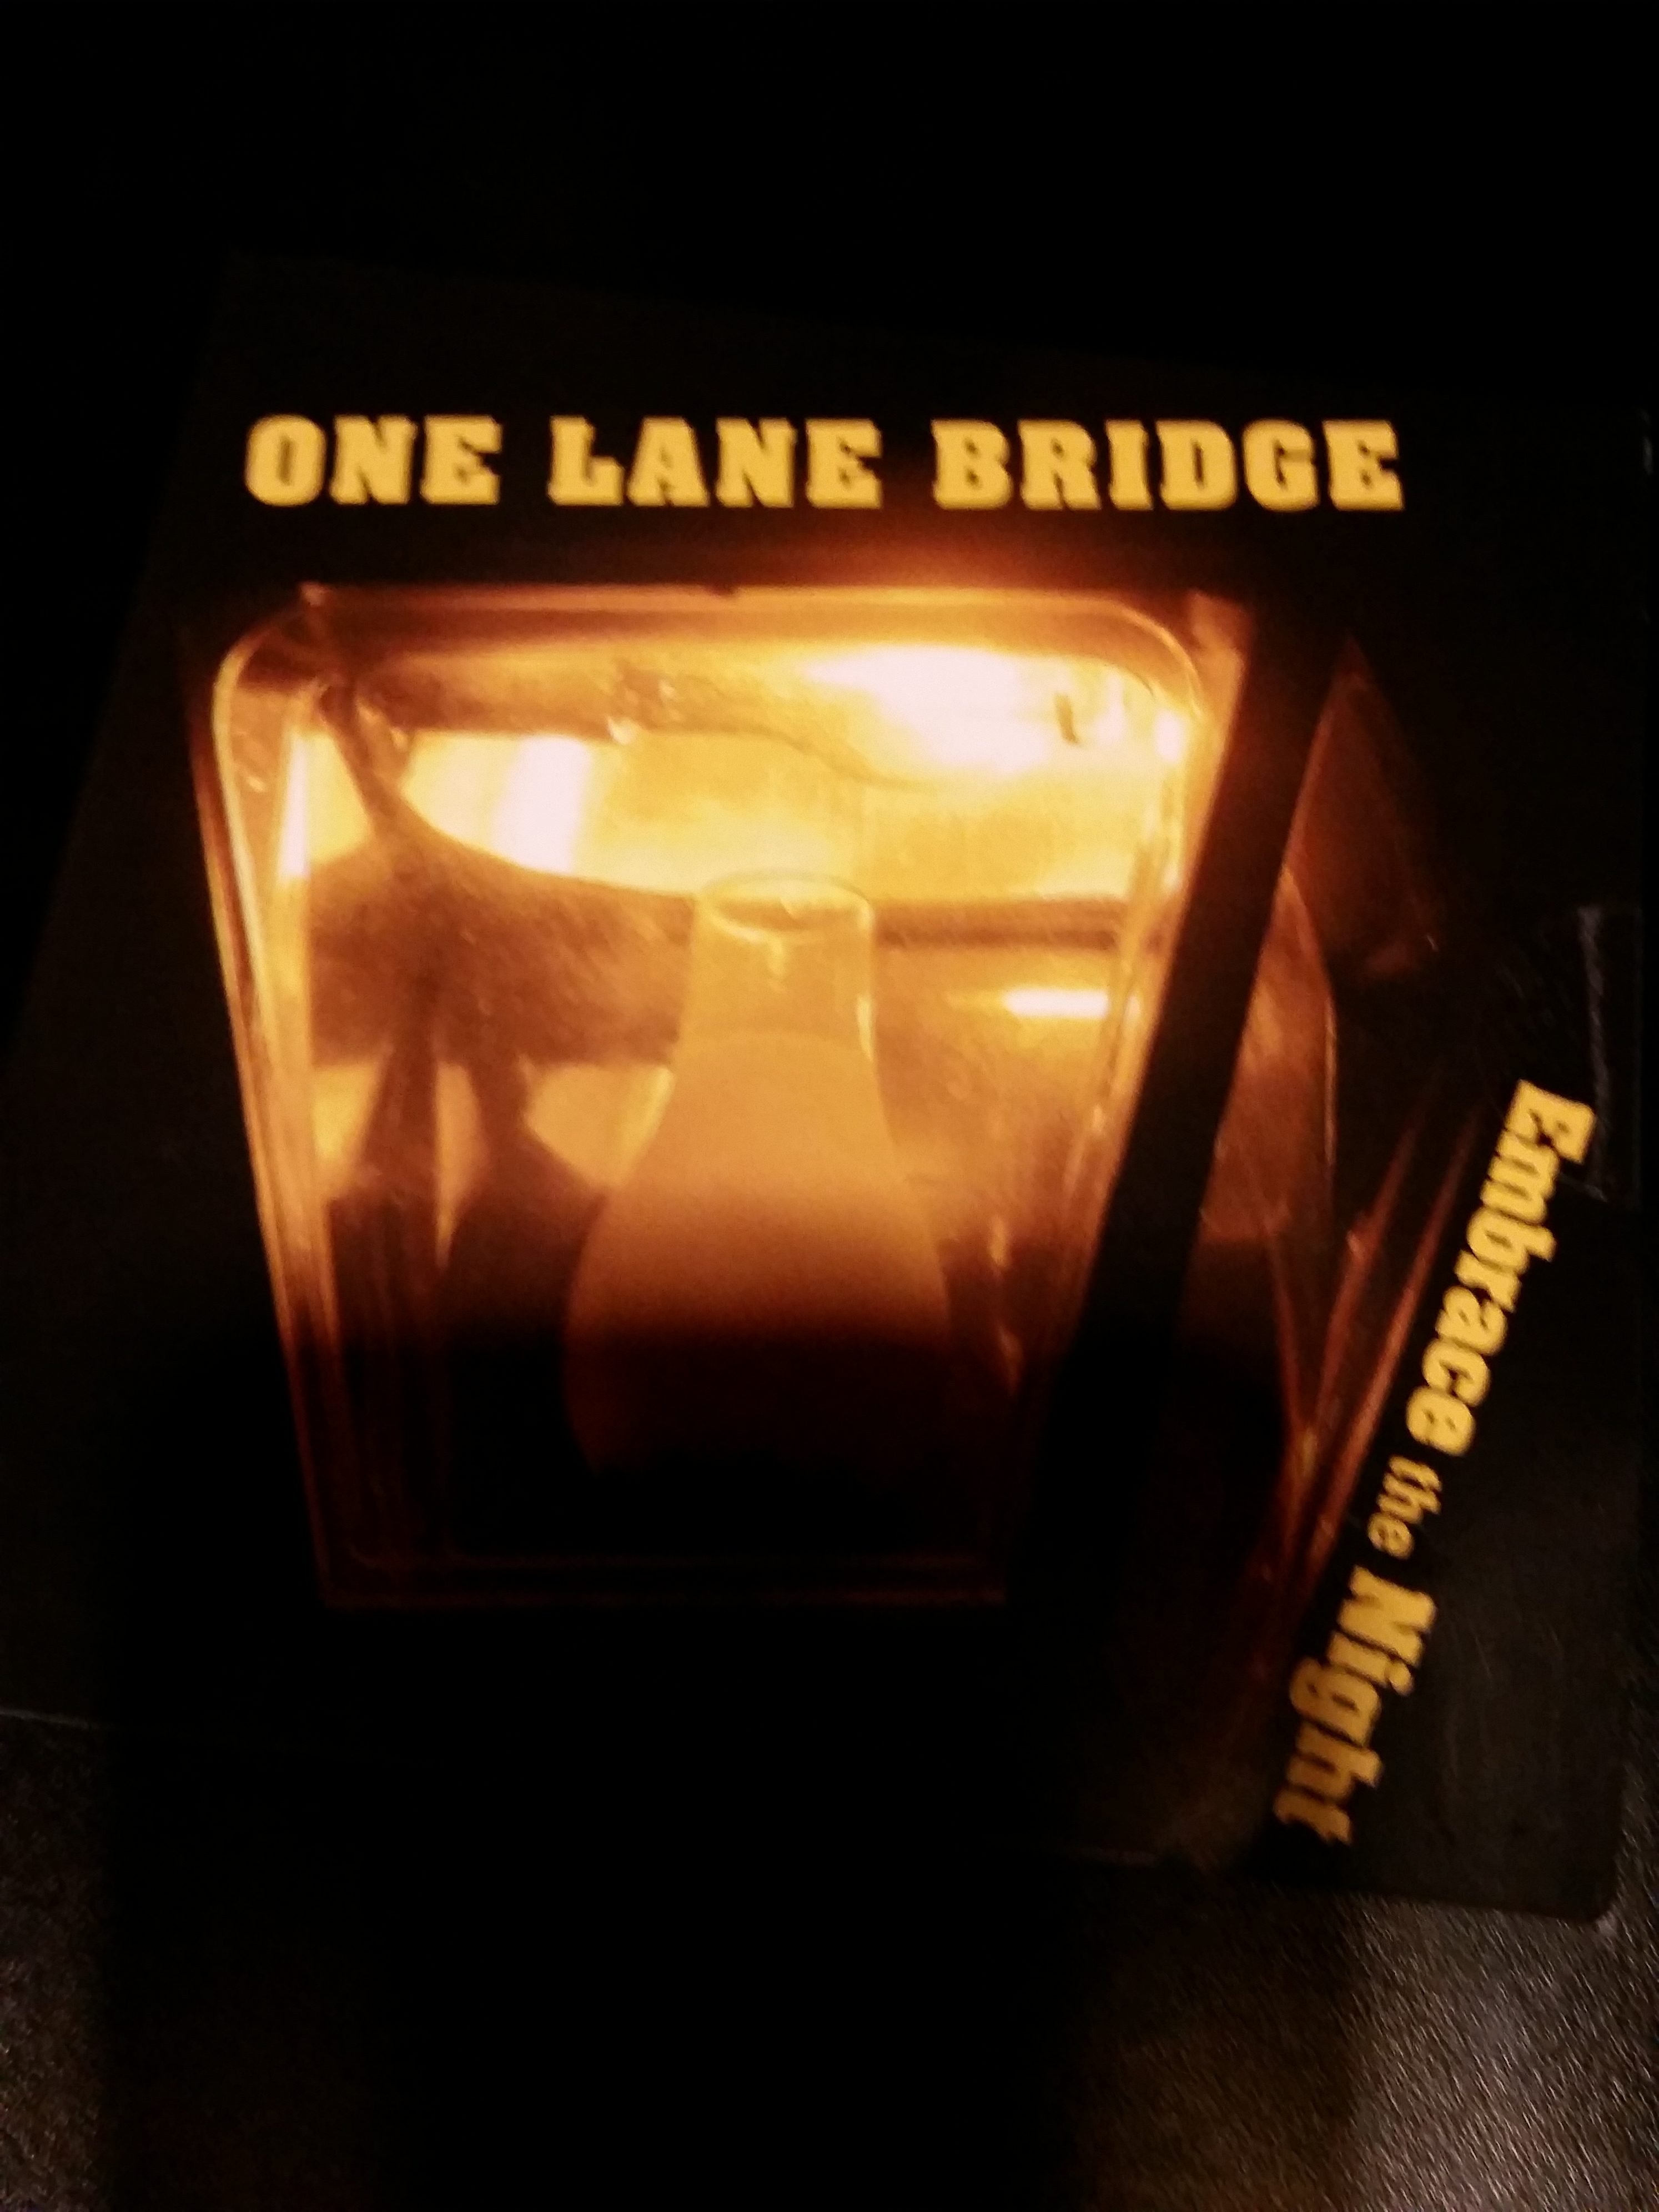 ONE LANE BRIDGE releases another EP